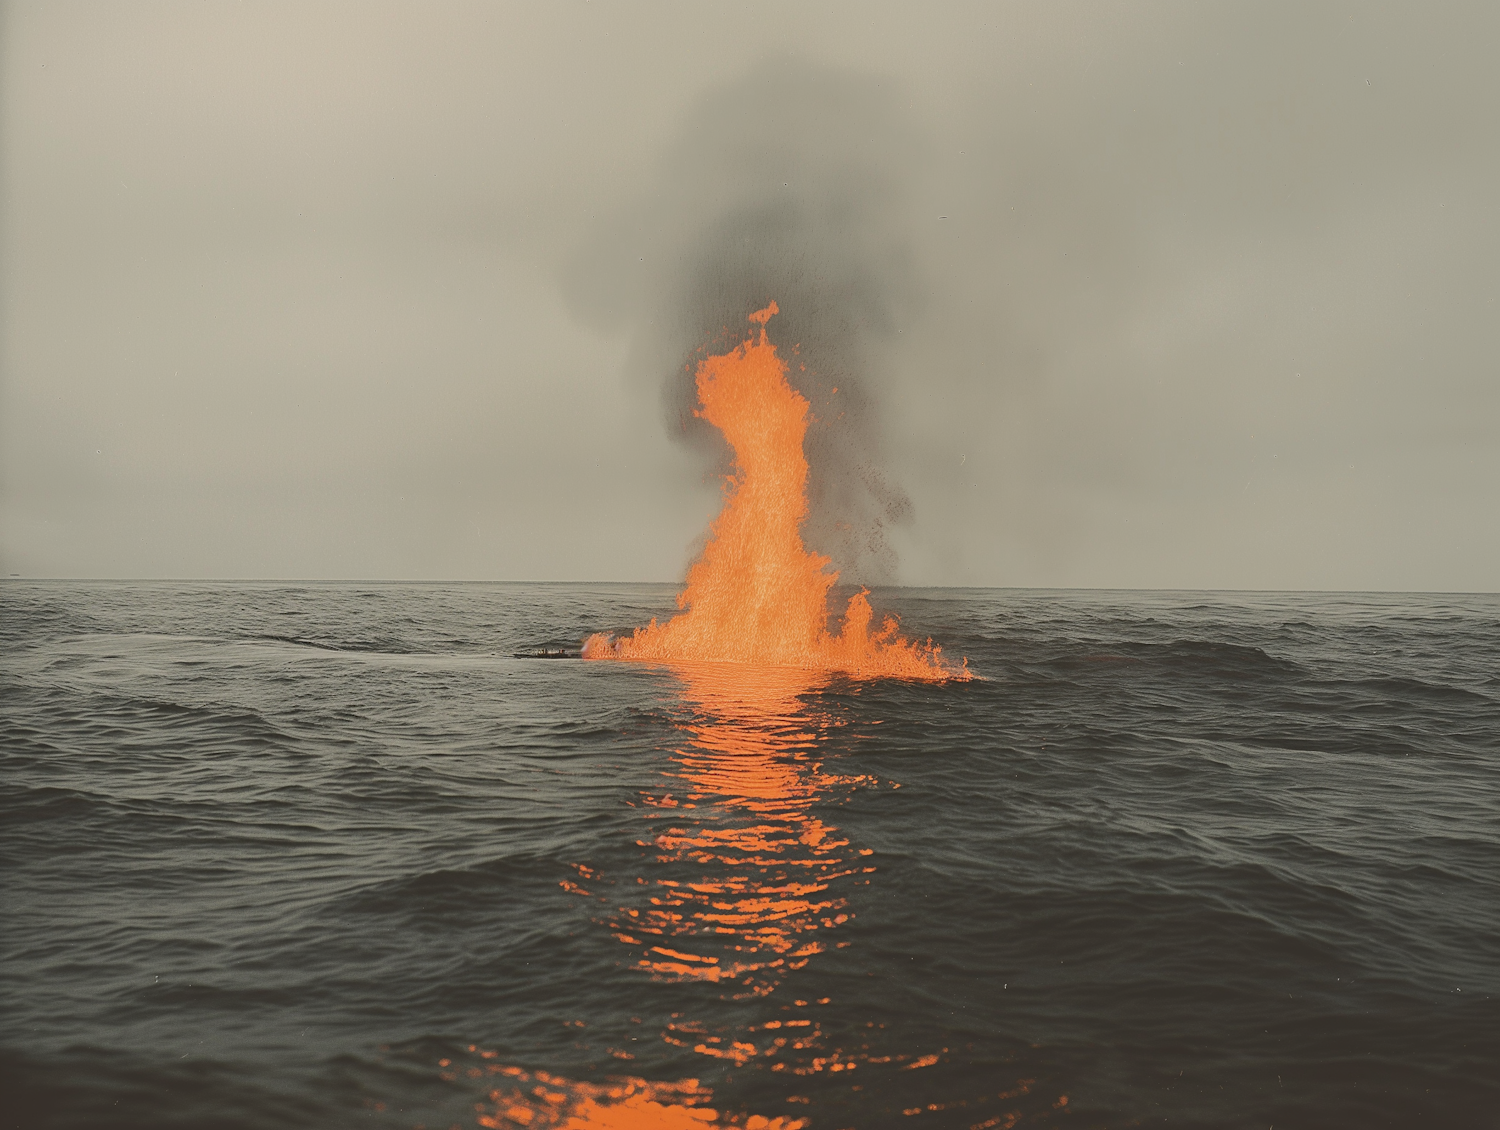 Dramatic Volcanic Eruption at Sea